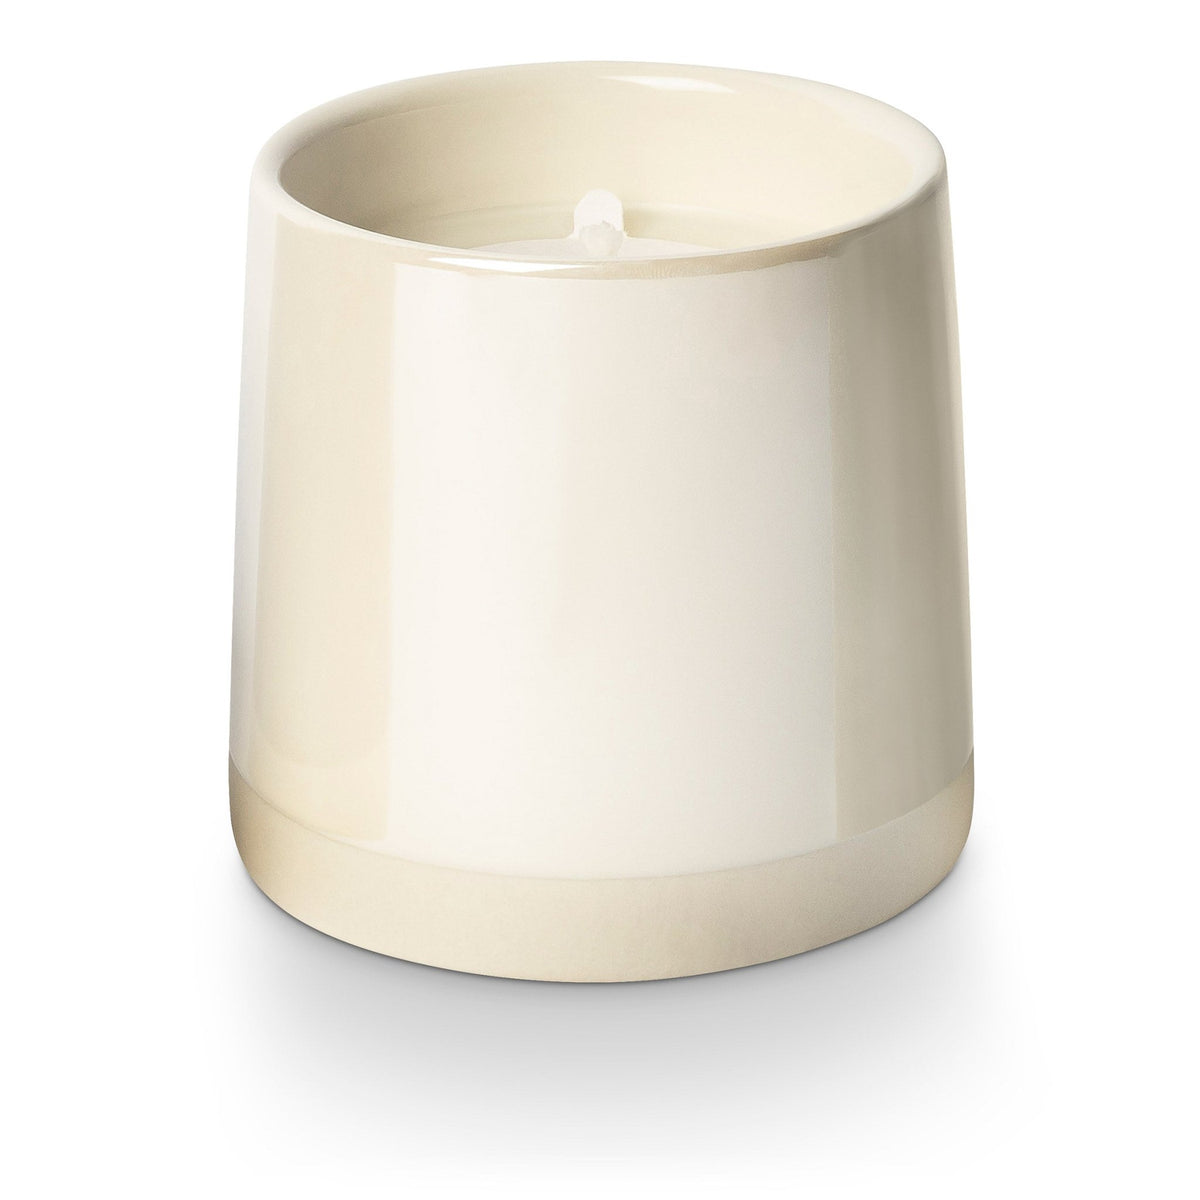 Illume Shine Ceramic Candle, Winter White